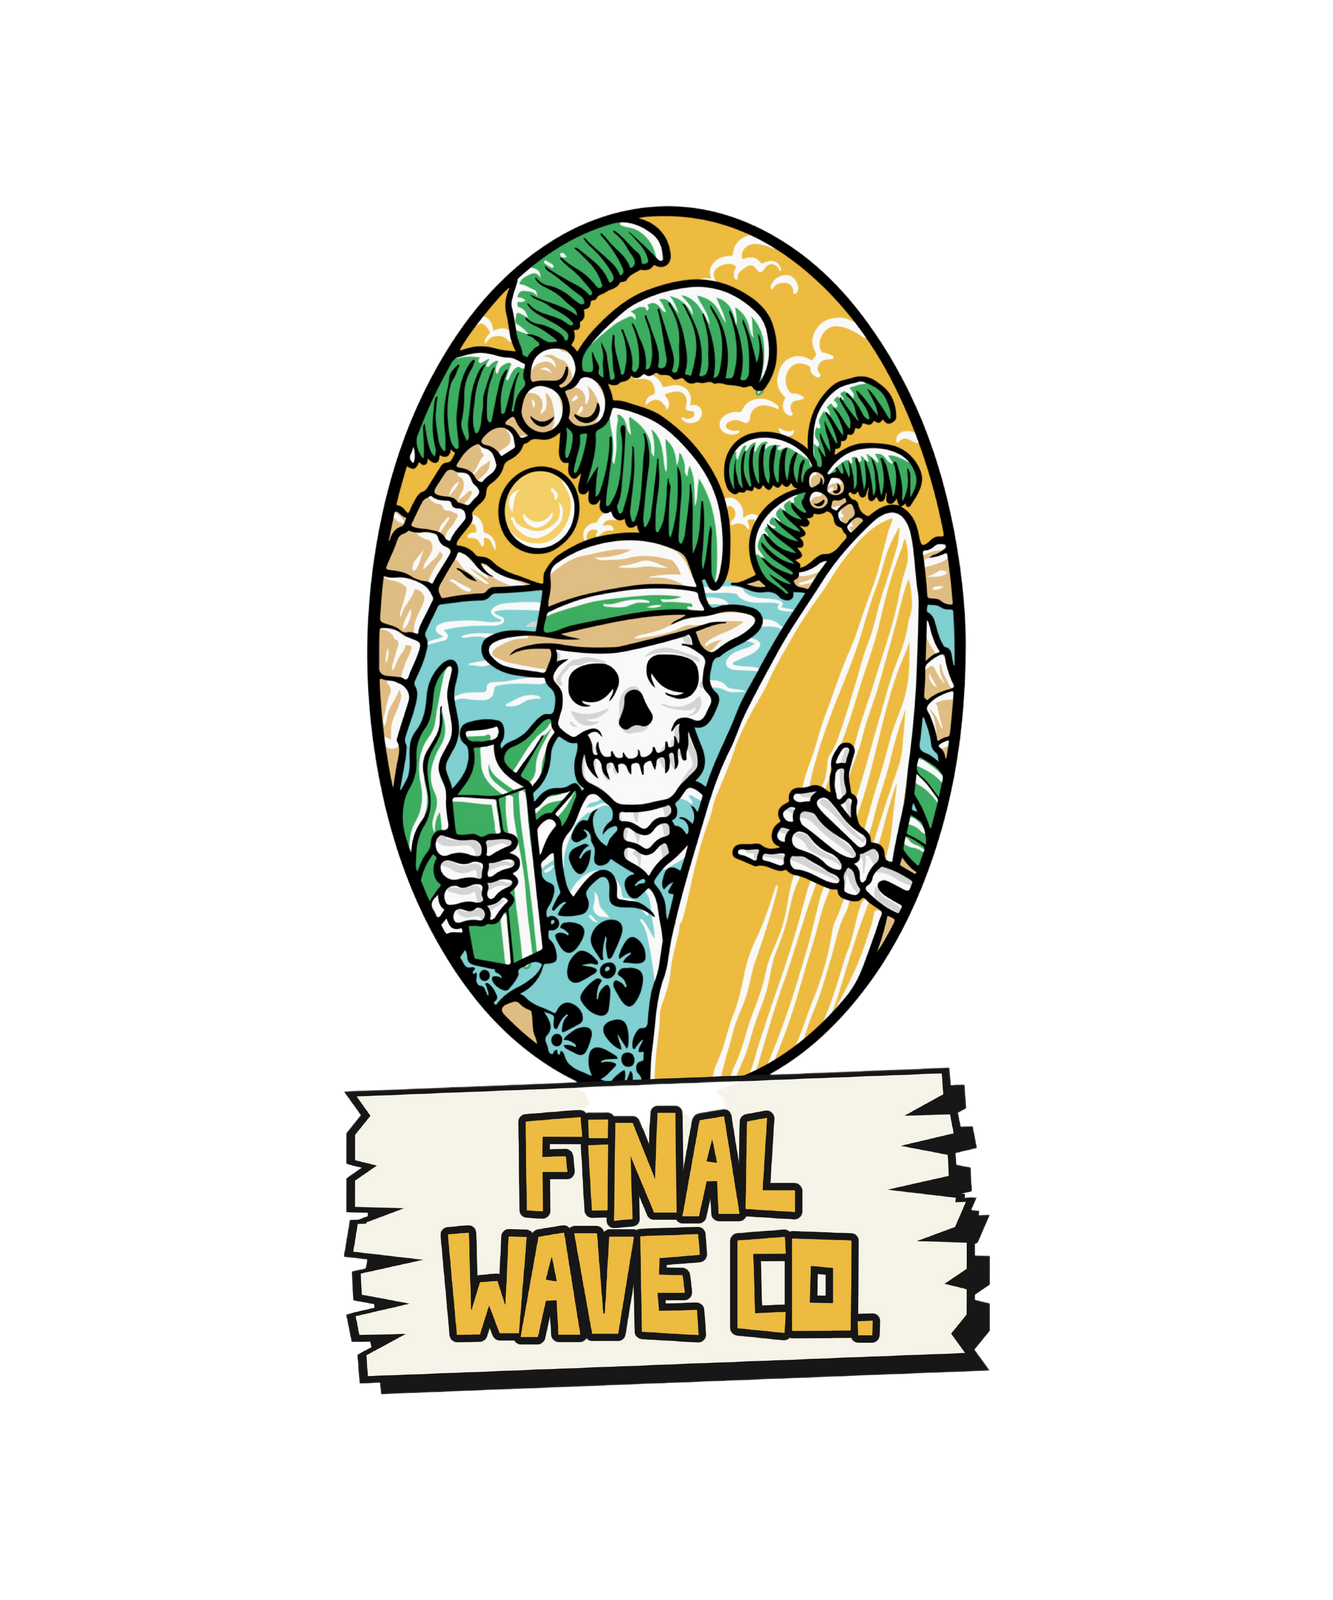 Final Wave Co